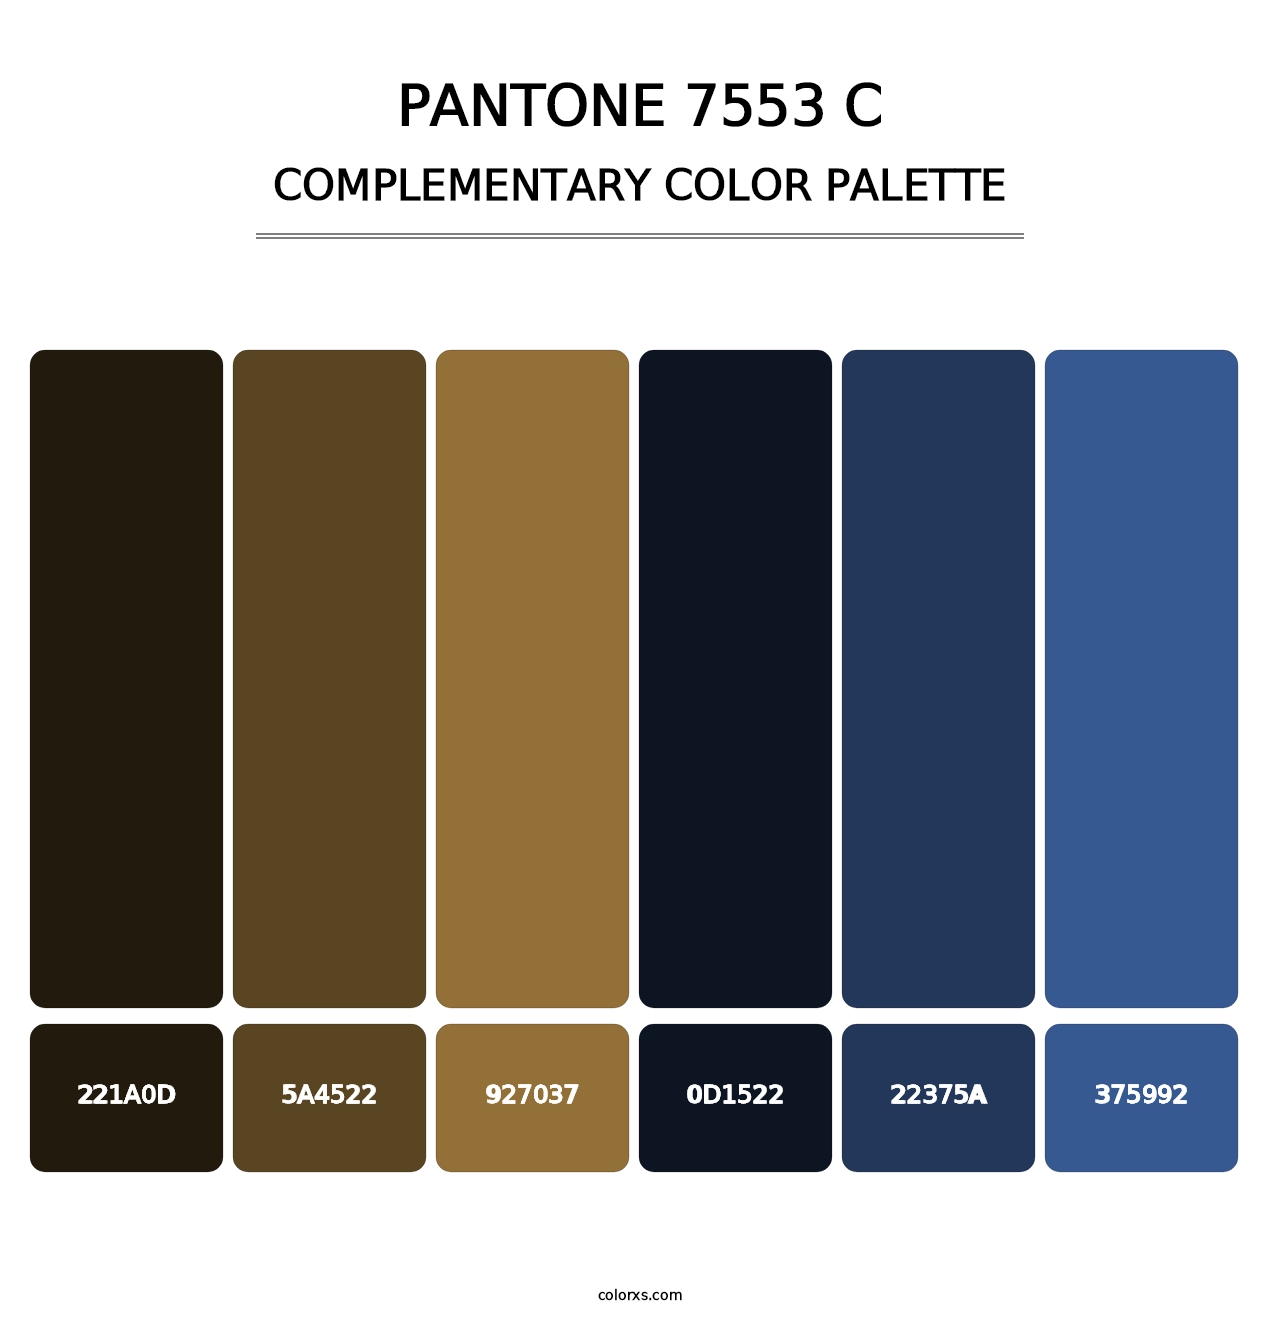 PANTONE 7553 C - Complementary Color Palette